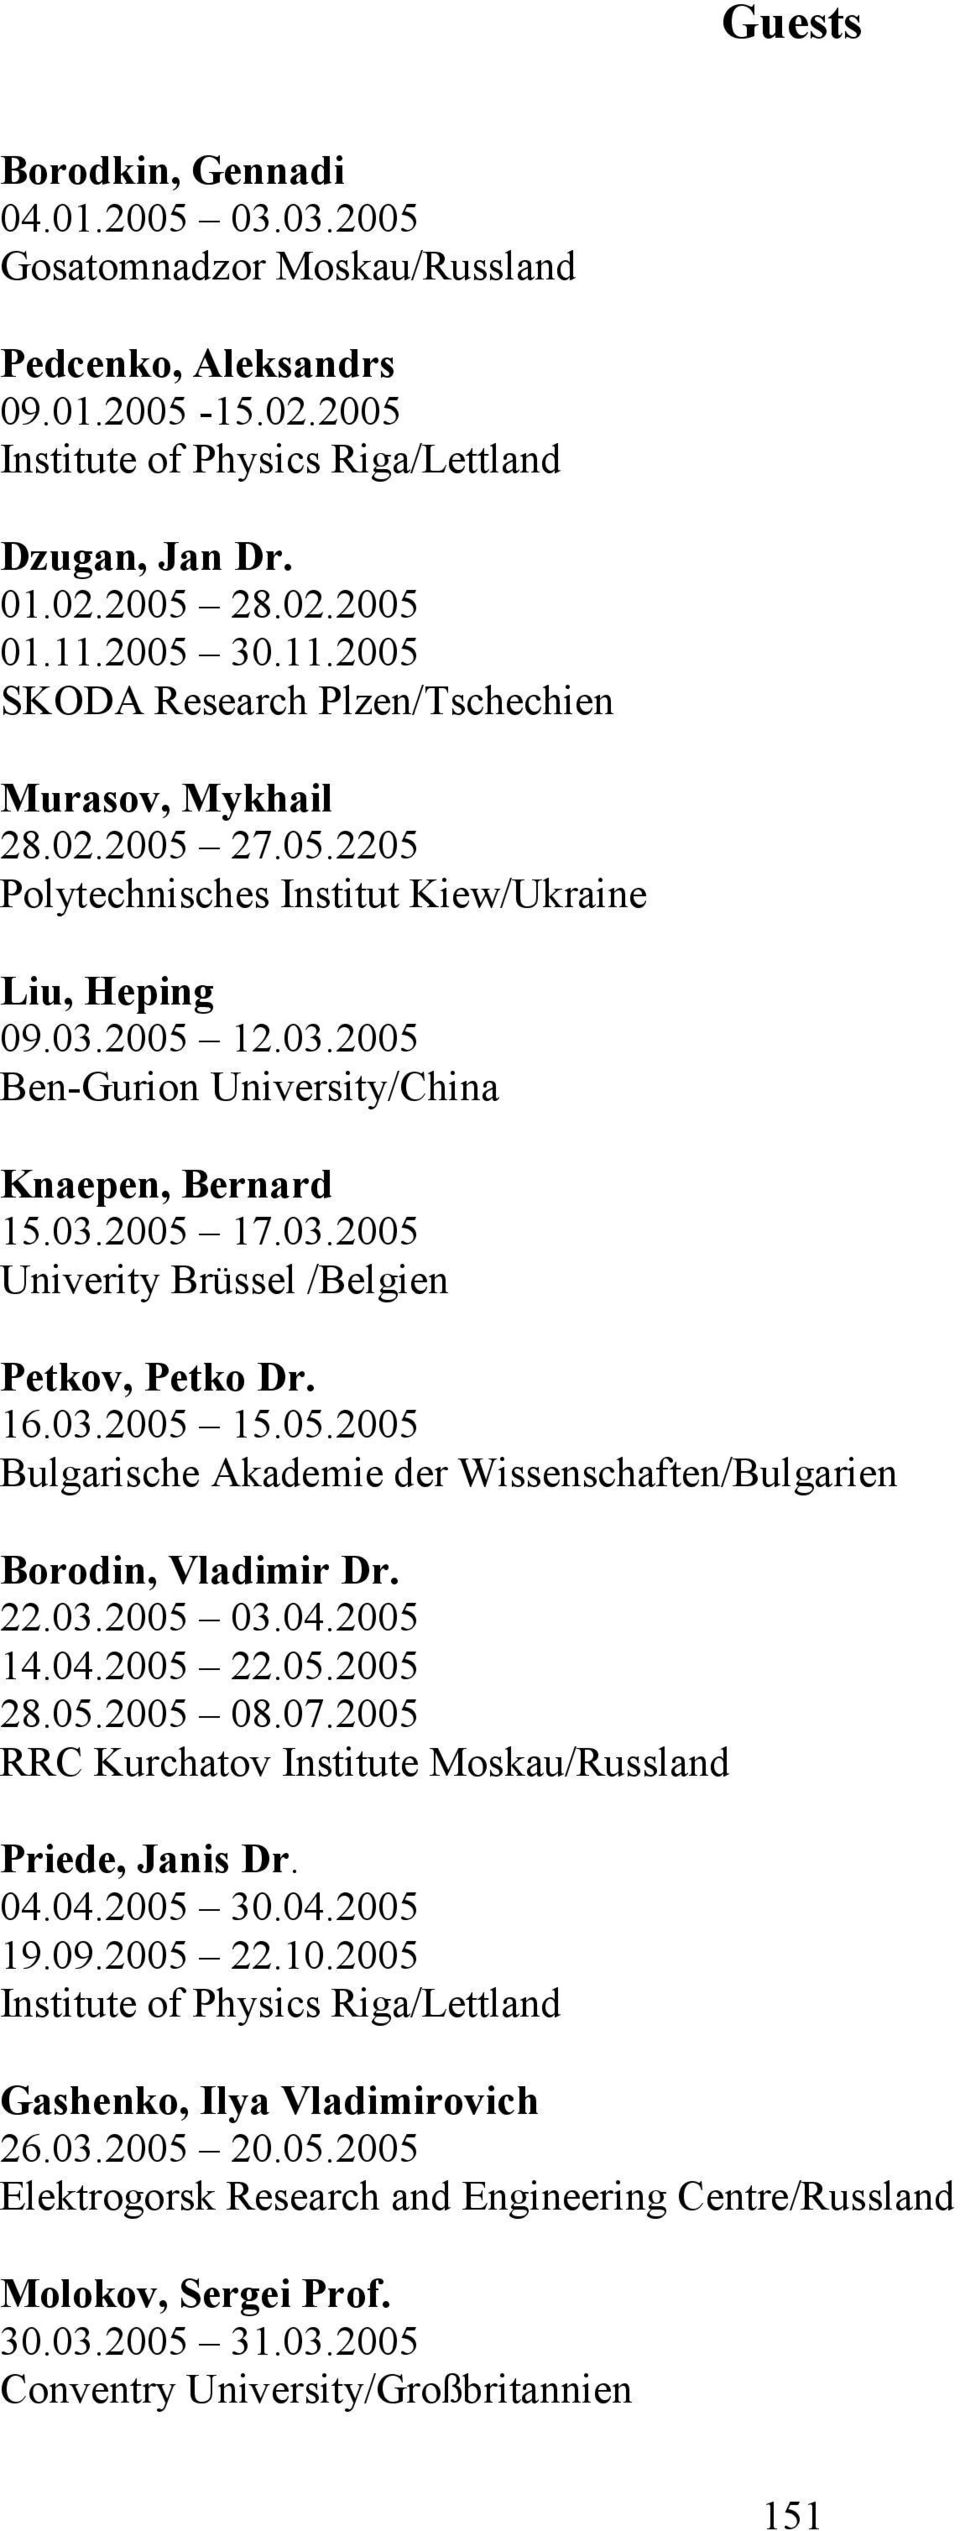 03.2005 17.03.2005 Univerity Brüssel /Belgien Petkov, Petko Dr. 16.03.2005 15.05.2005 Bulgarische Akademie der Wissenschaften/Bulgarien Borodin, Vladimir Dr. 22.03.2005 03.04.2005 14.04.2005 22.05.2005 28.